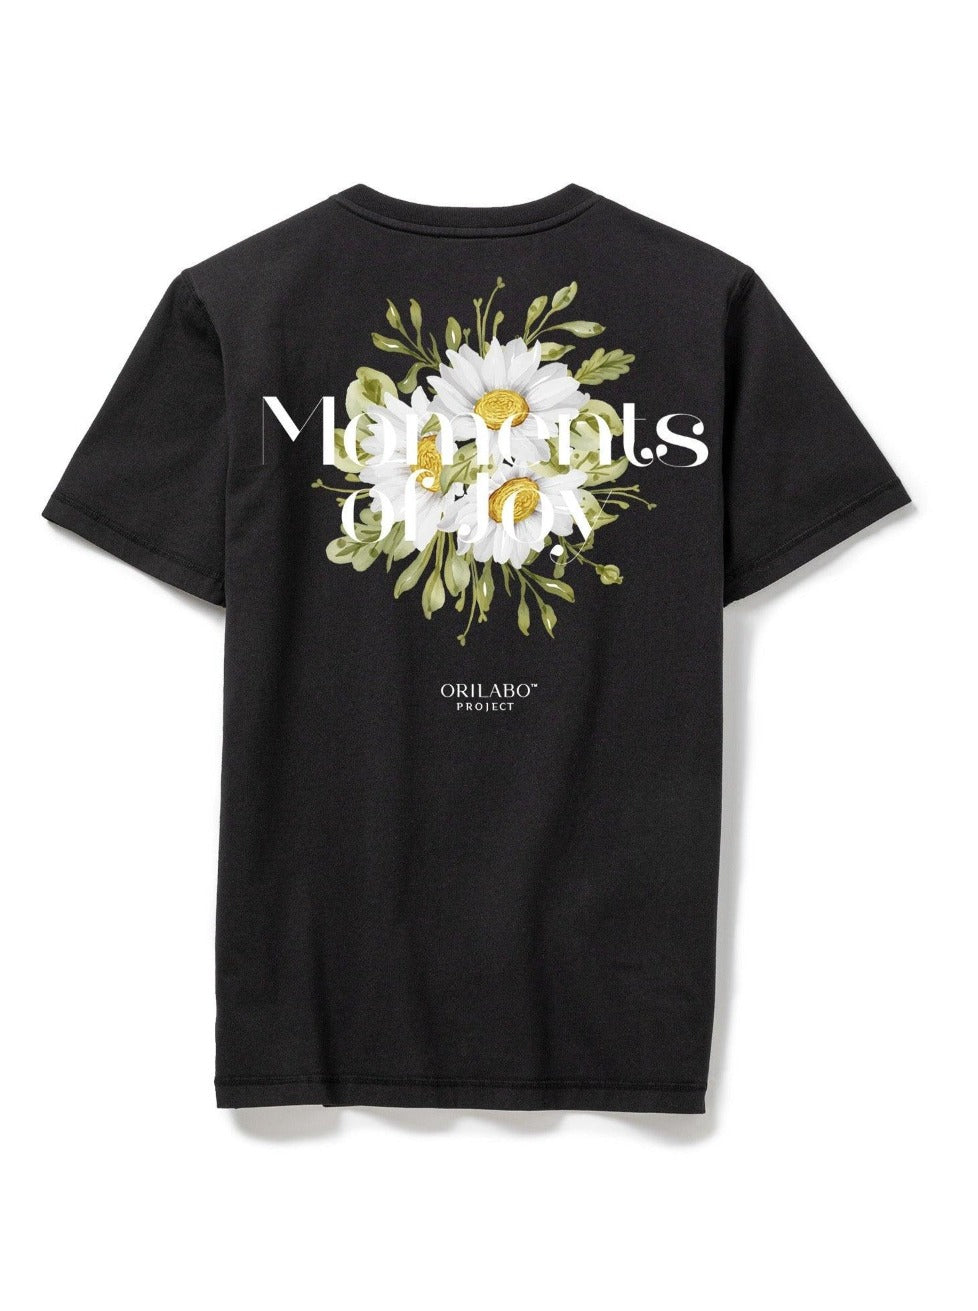 Women's Daisy T-shirt - Black - ORILABO Project